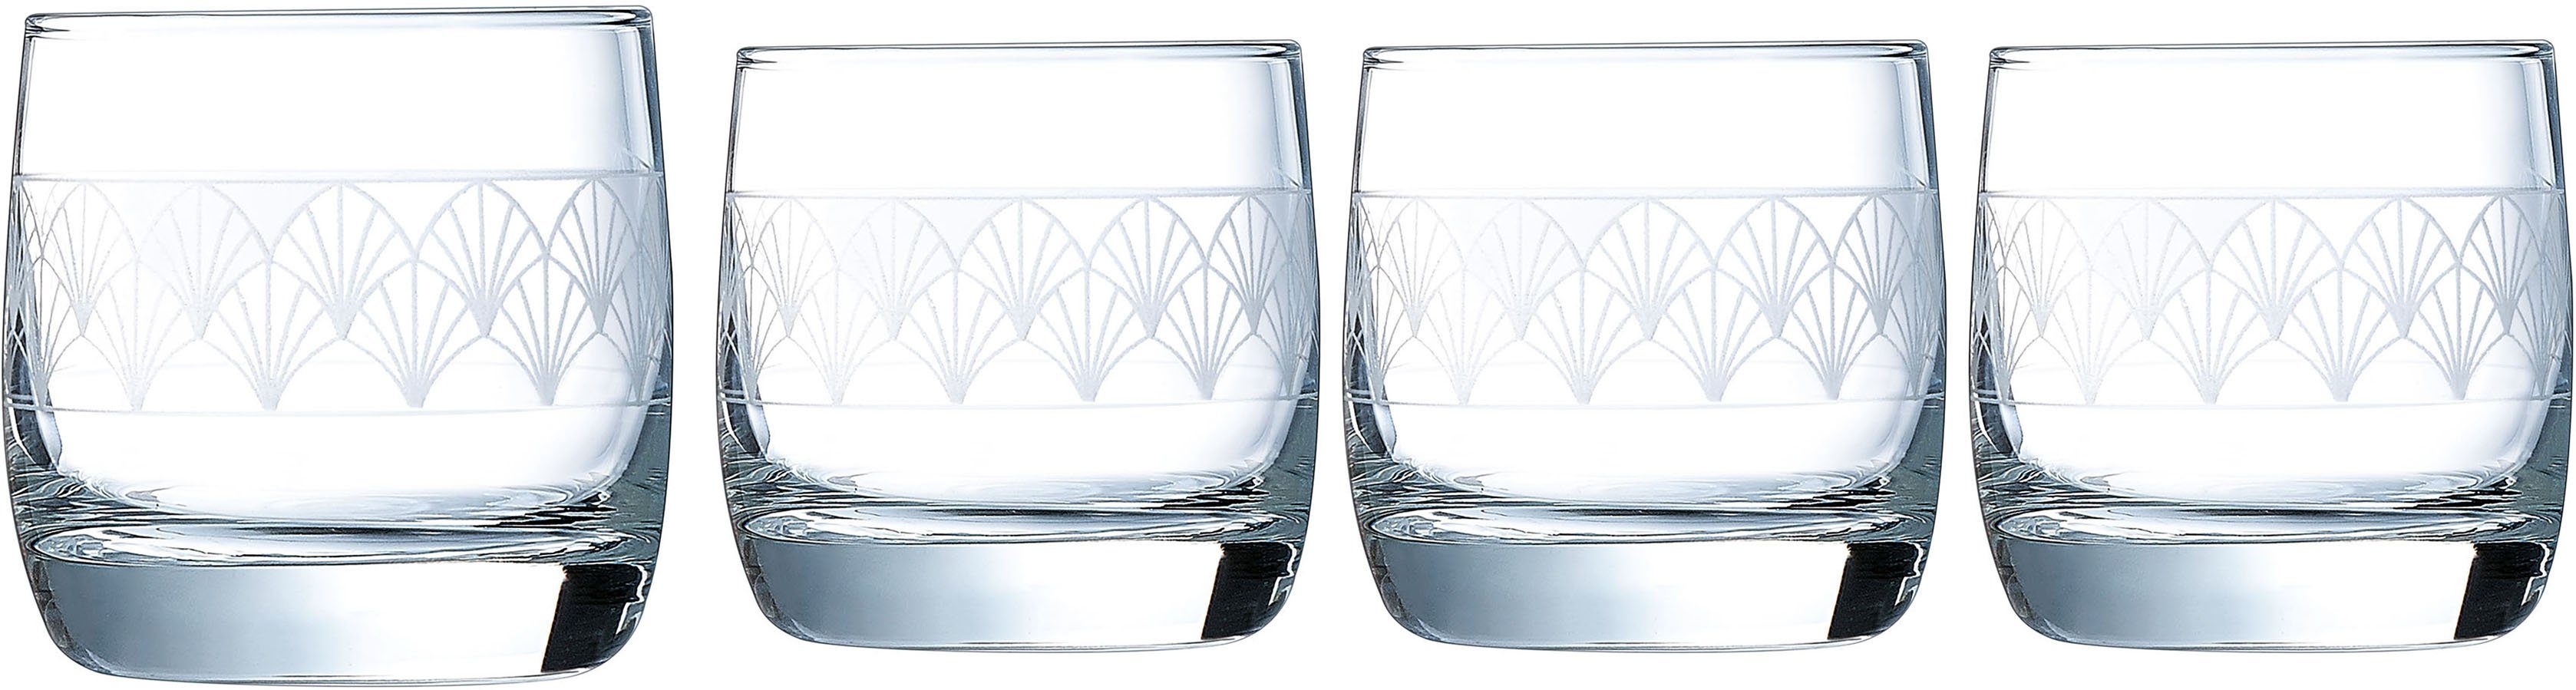 CreaTable Luminarc Whiskyglas Trinkglas Paradisio, Glas, Gläser Set, mit Pantographie-Optik, 4-teilig, Made in Europe